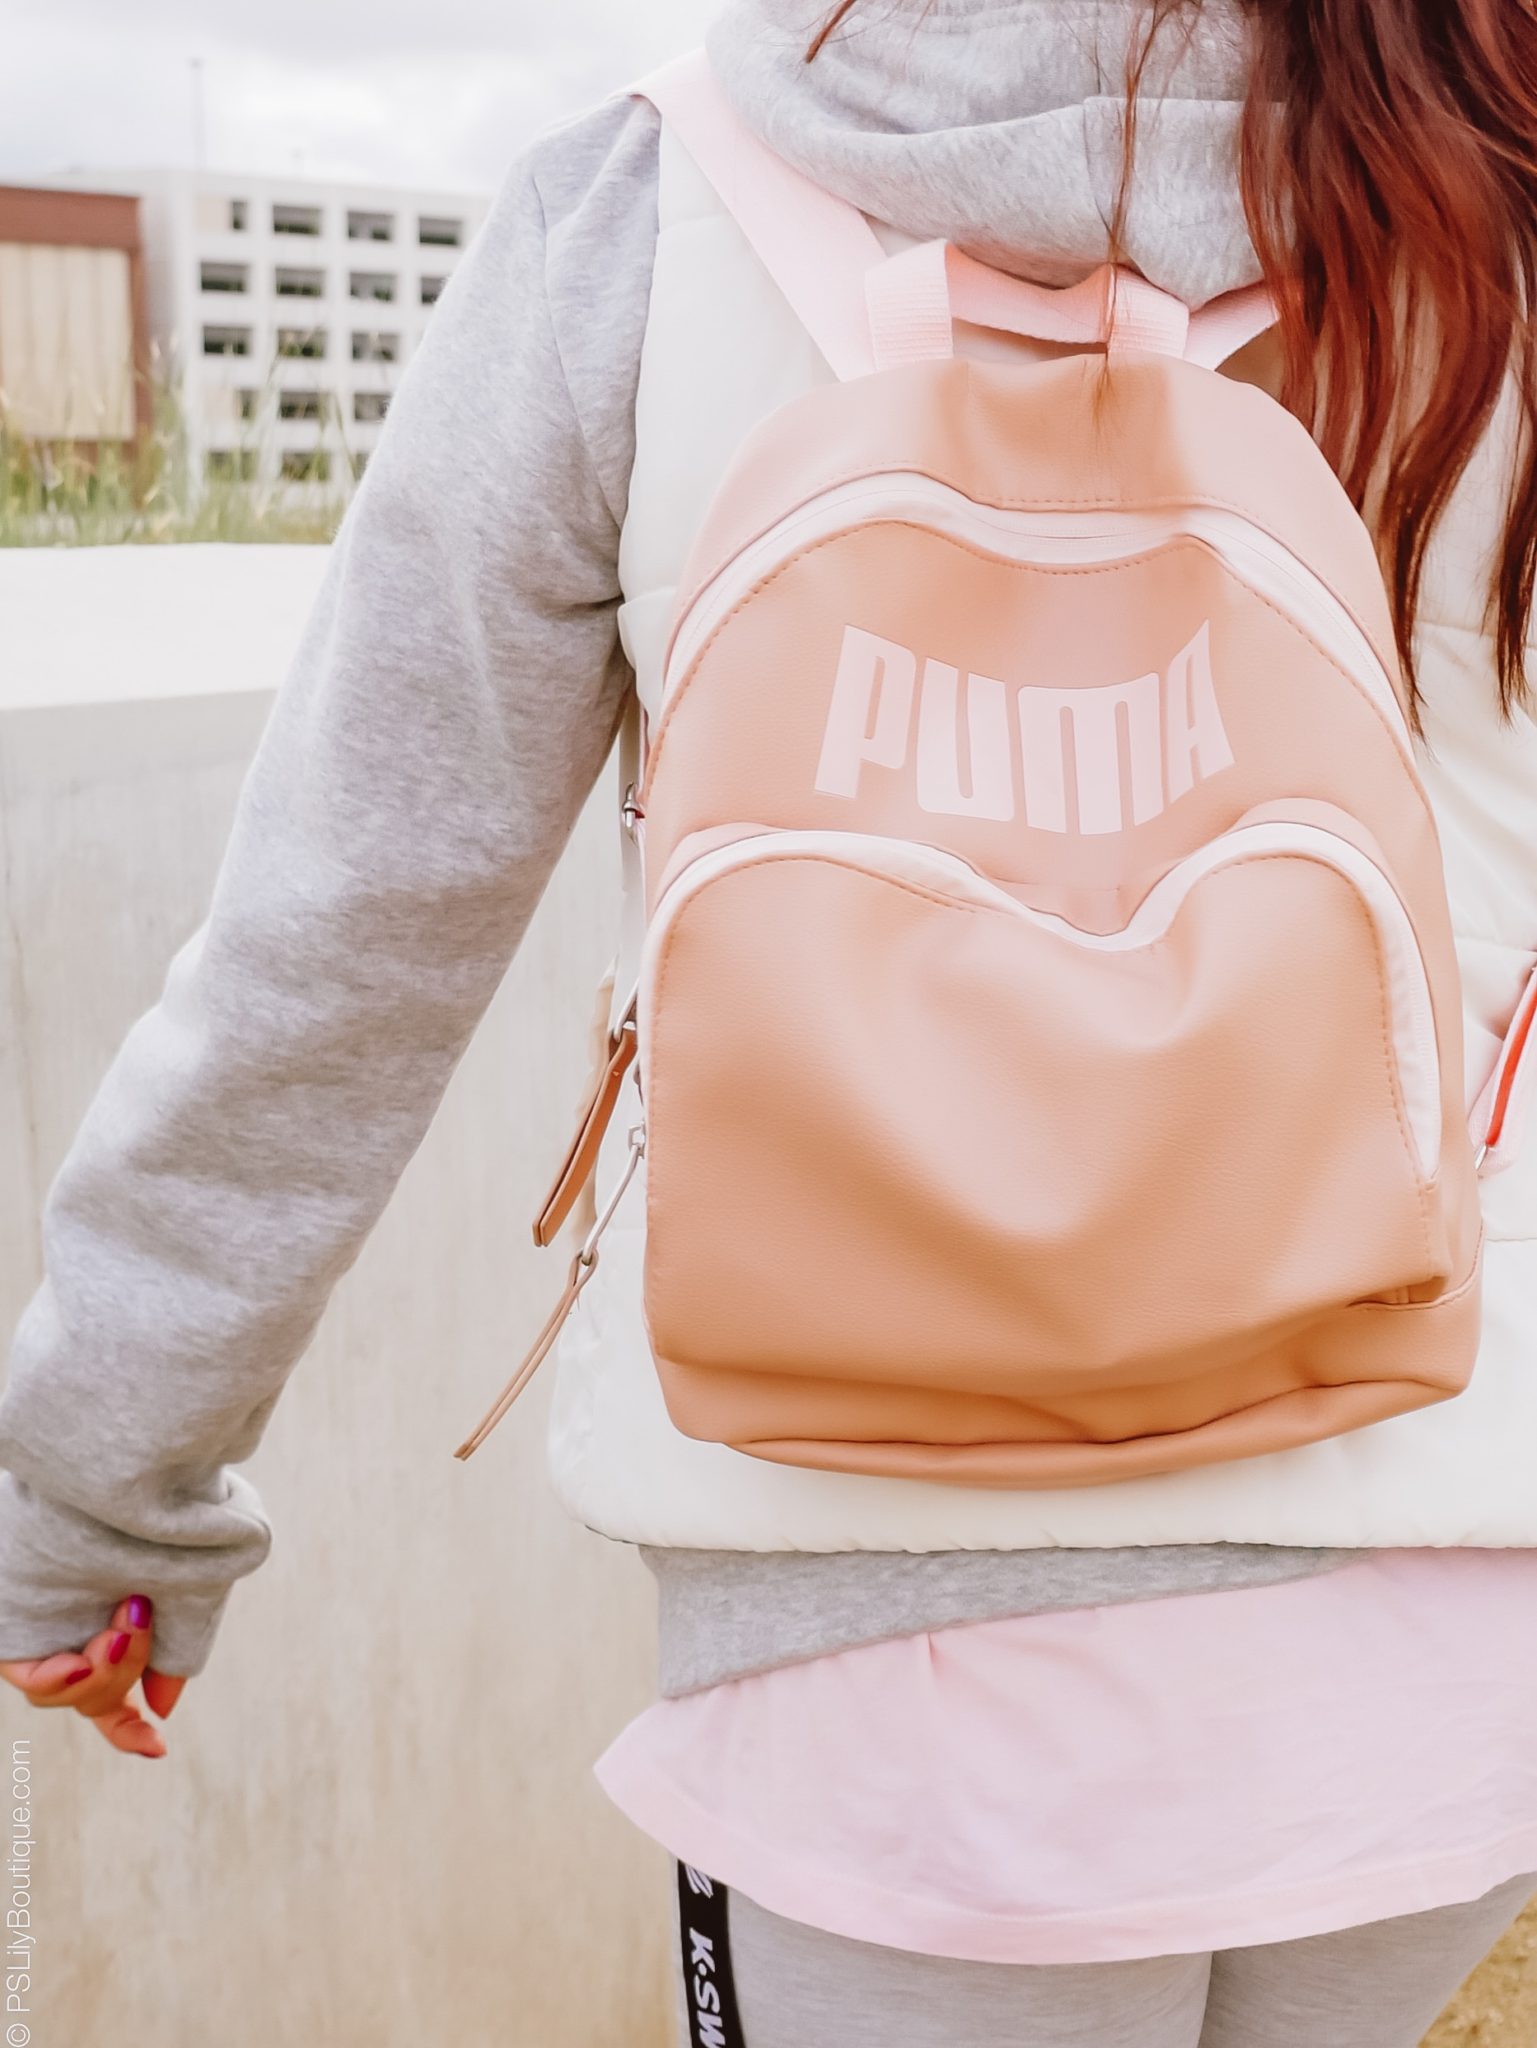 instagram-pslilyboutique-pinterest-ready-go-pink-nails-pink-puma-Evercat-Royale-Backpack-Echo_Park-27